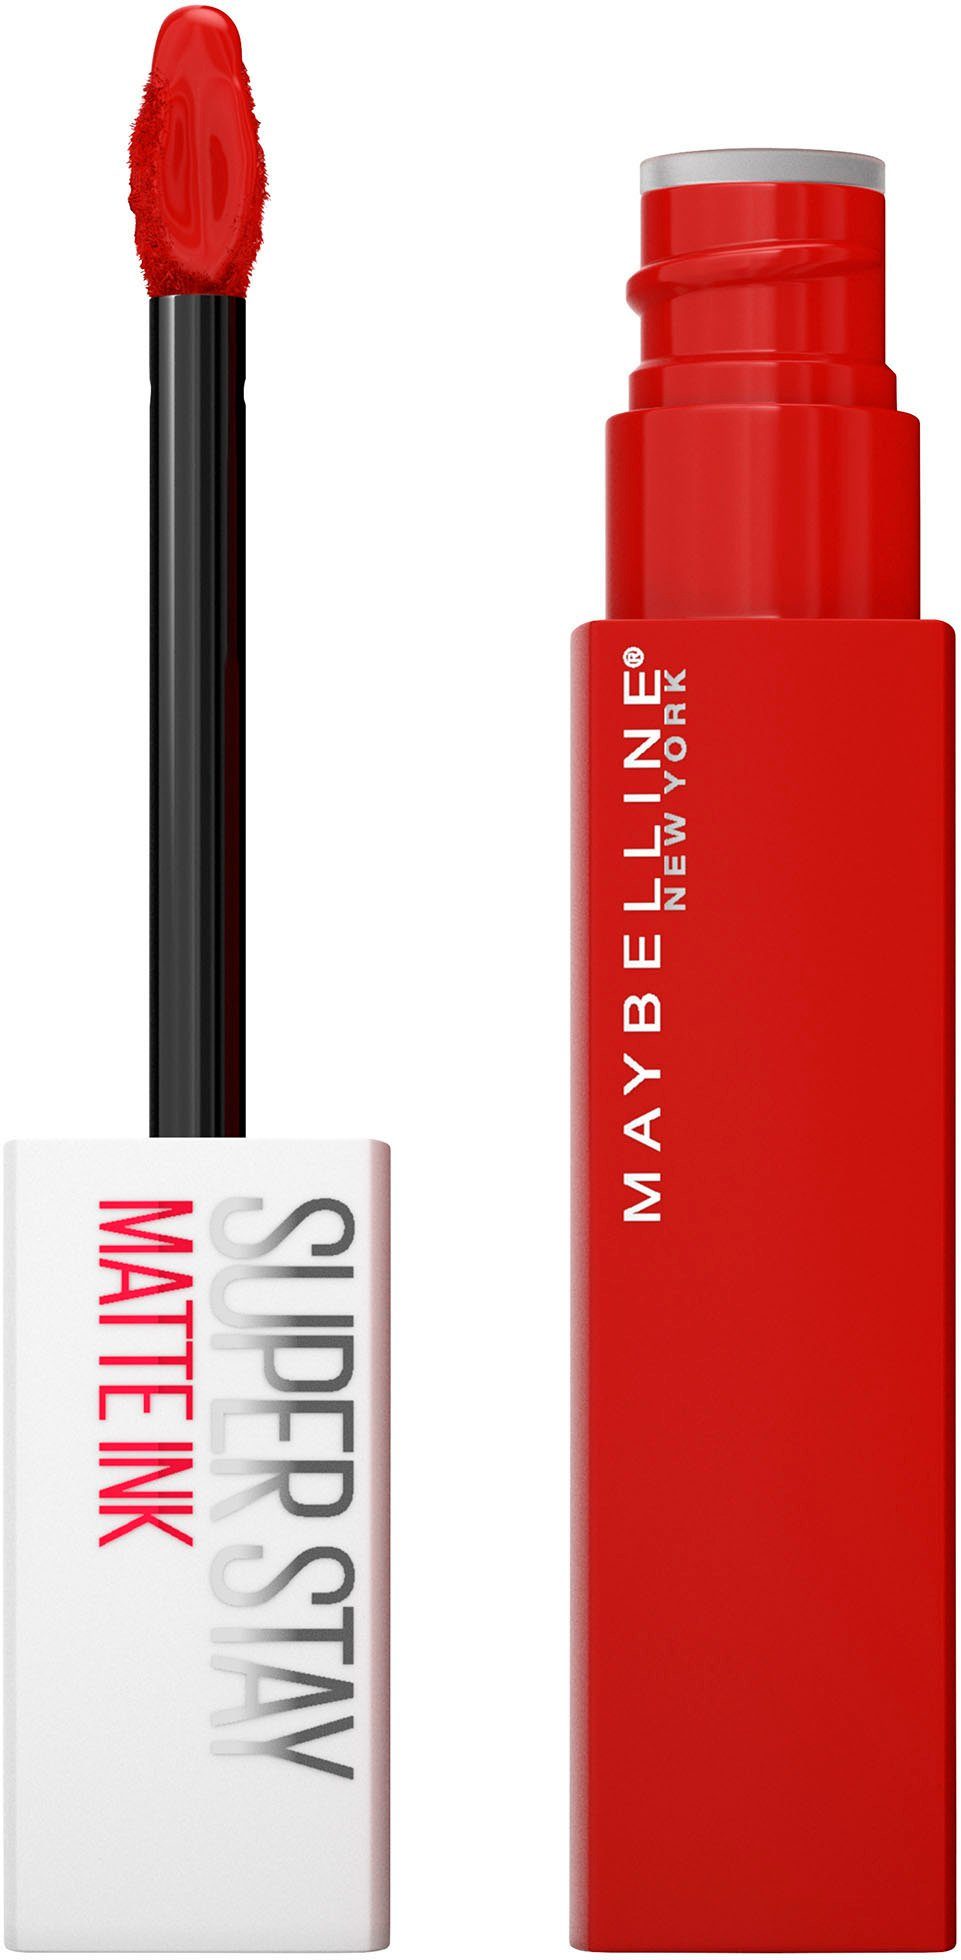 Matte NEW Lippenstift Super 330 YORK Up Ink Innovator MAYBELLINE Stay Spiced